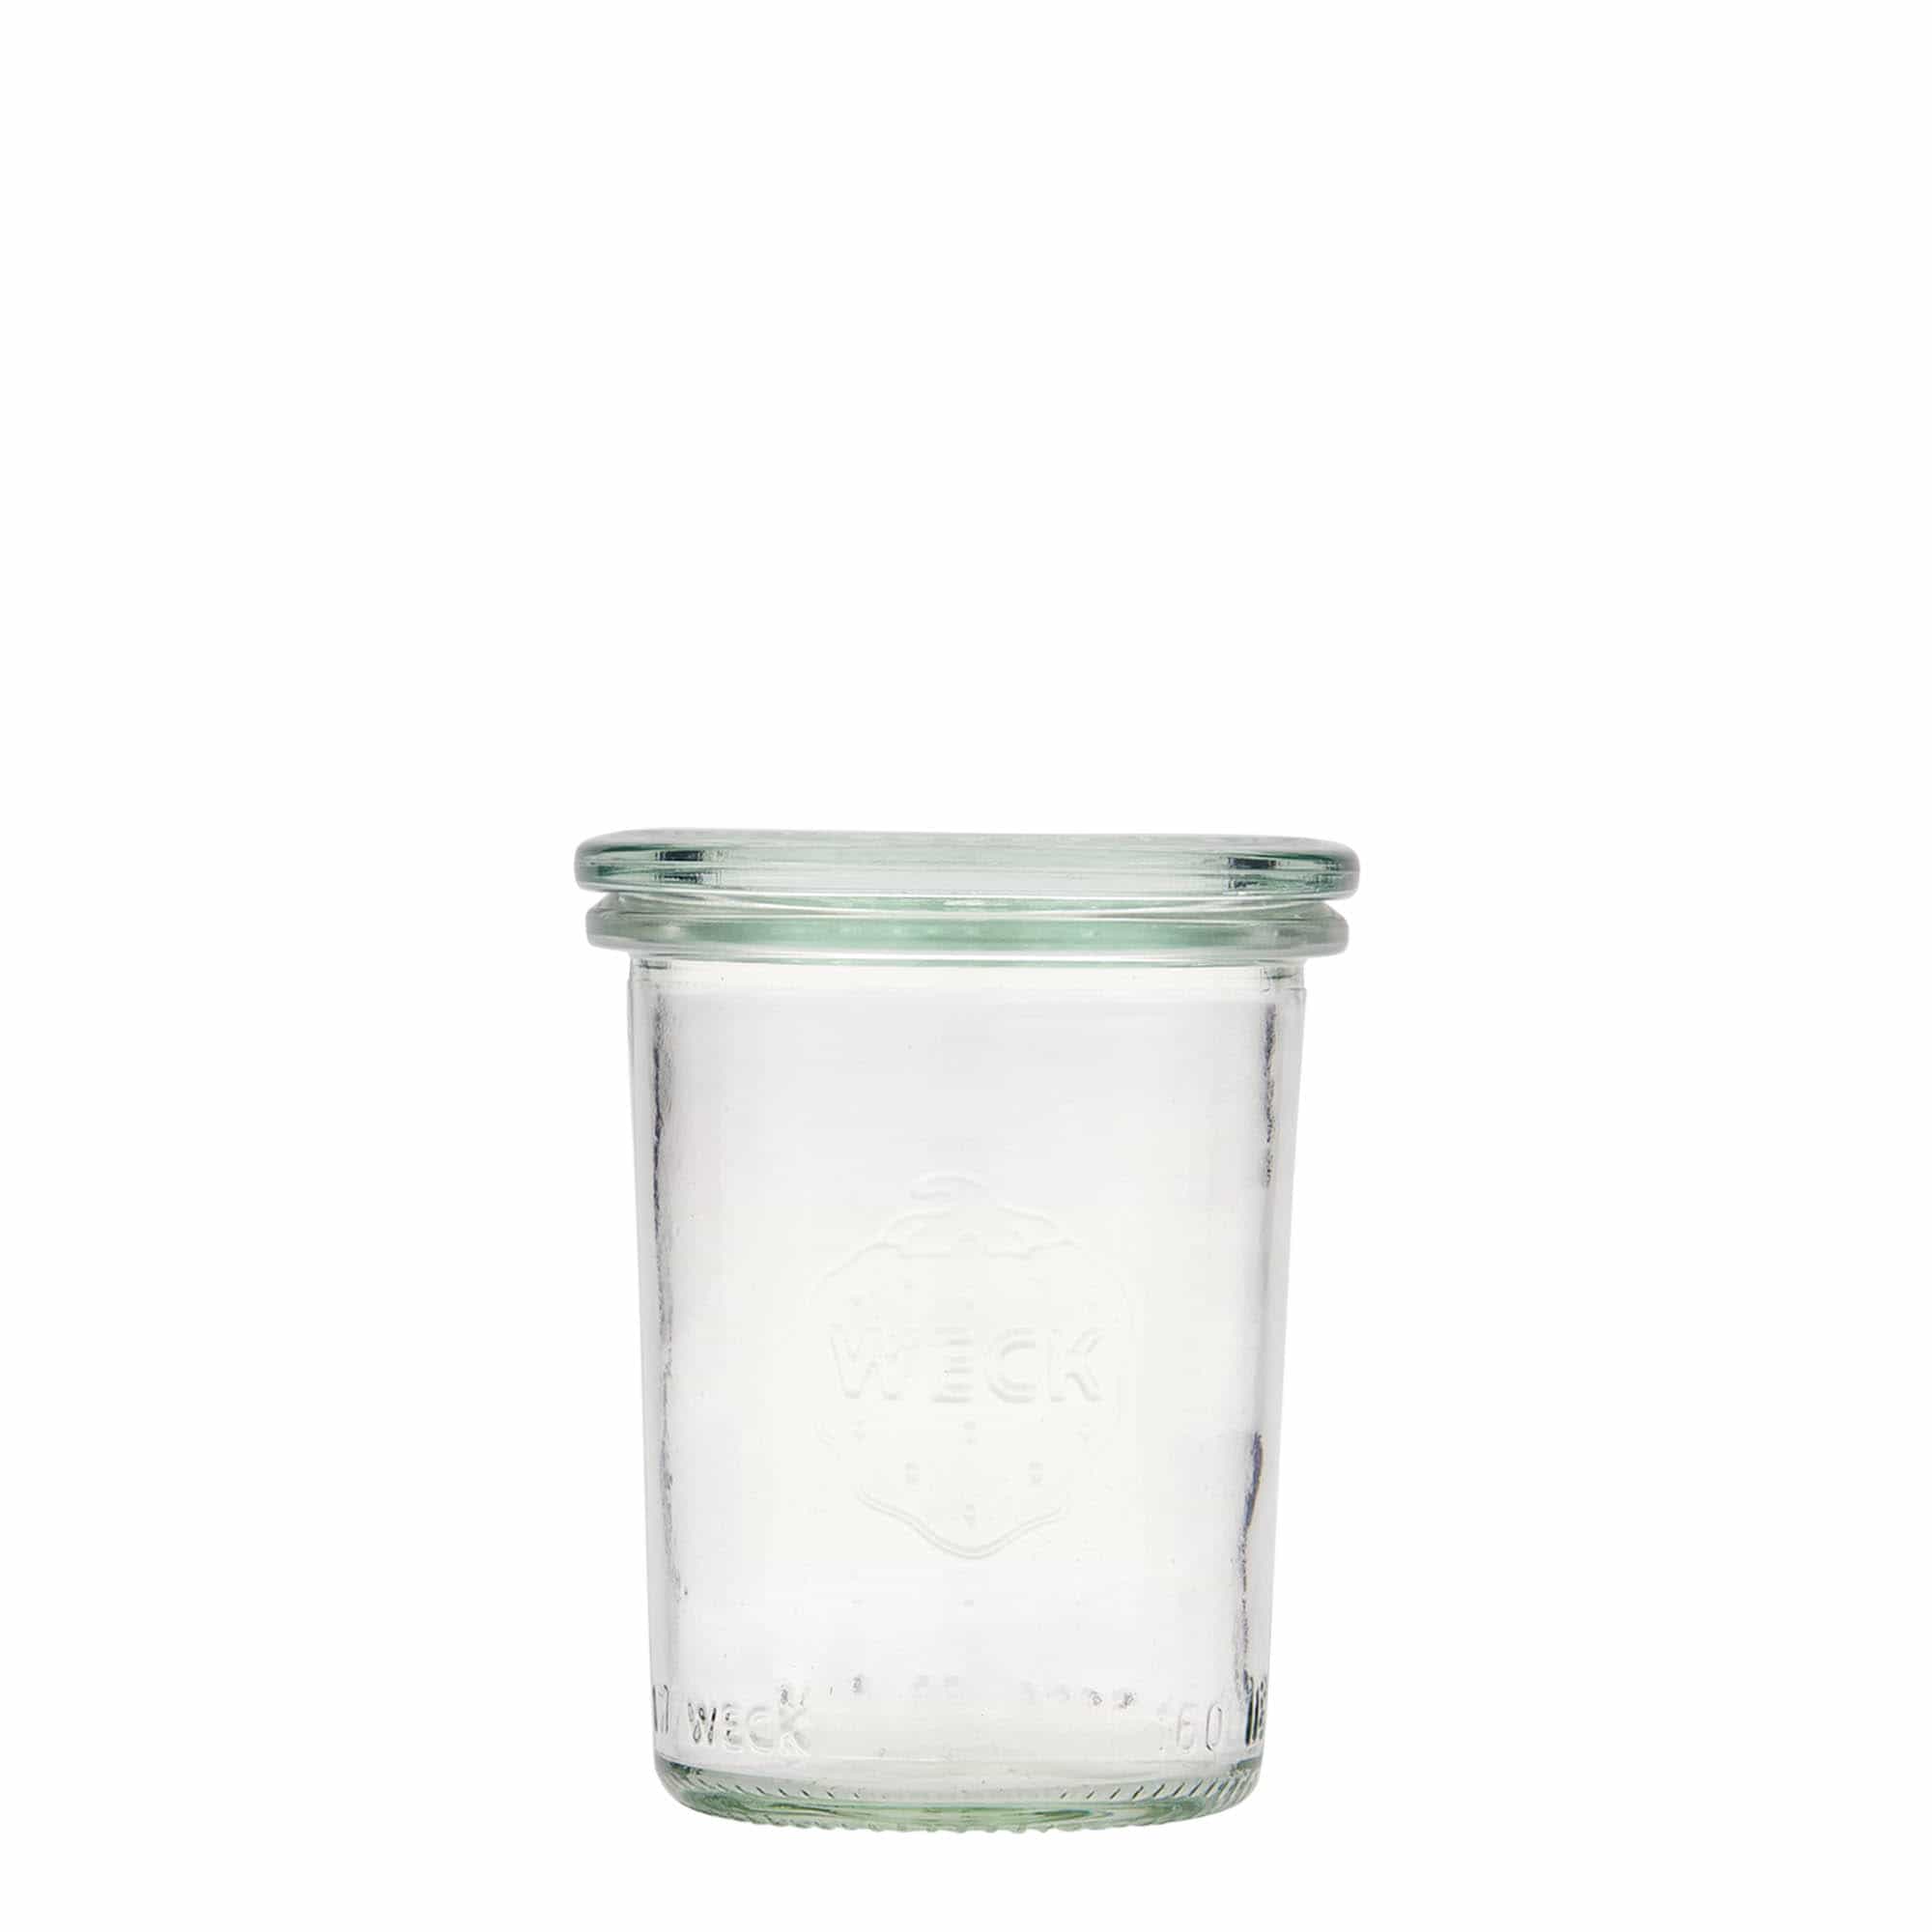 160 ml WECK cylindrical jar, closure: round rim